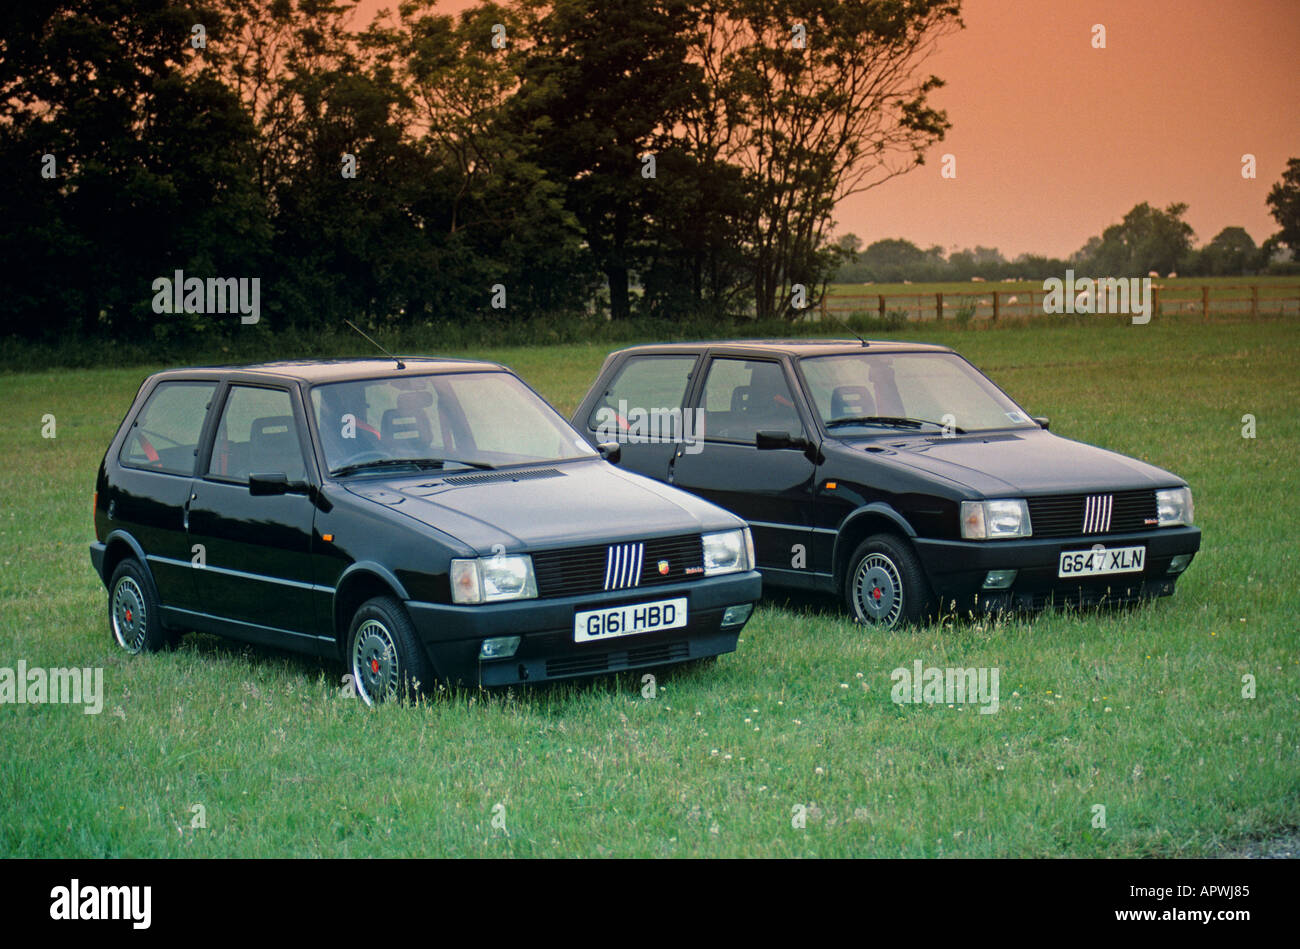 Fiat Uno Turbo ie. Turbo built 1985 to 1989. (Uno 1983 to 1989 Stock Photo  - Alamy